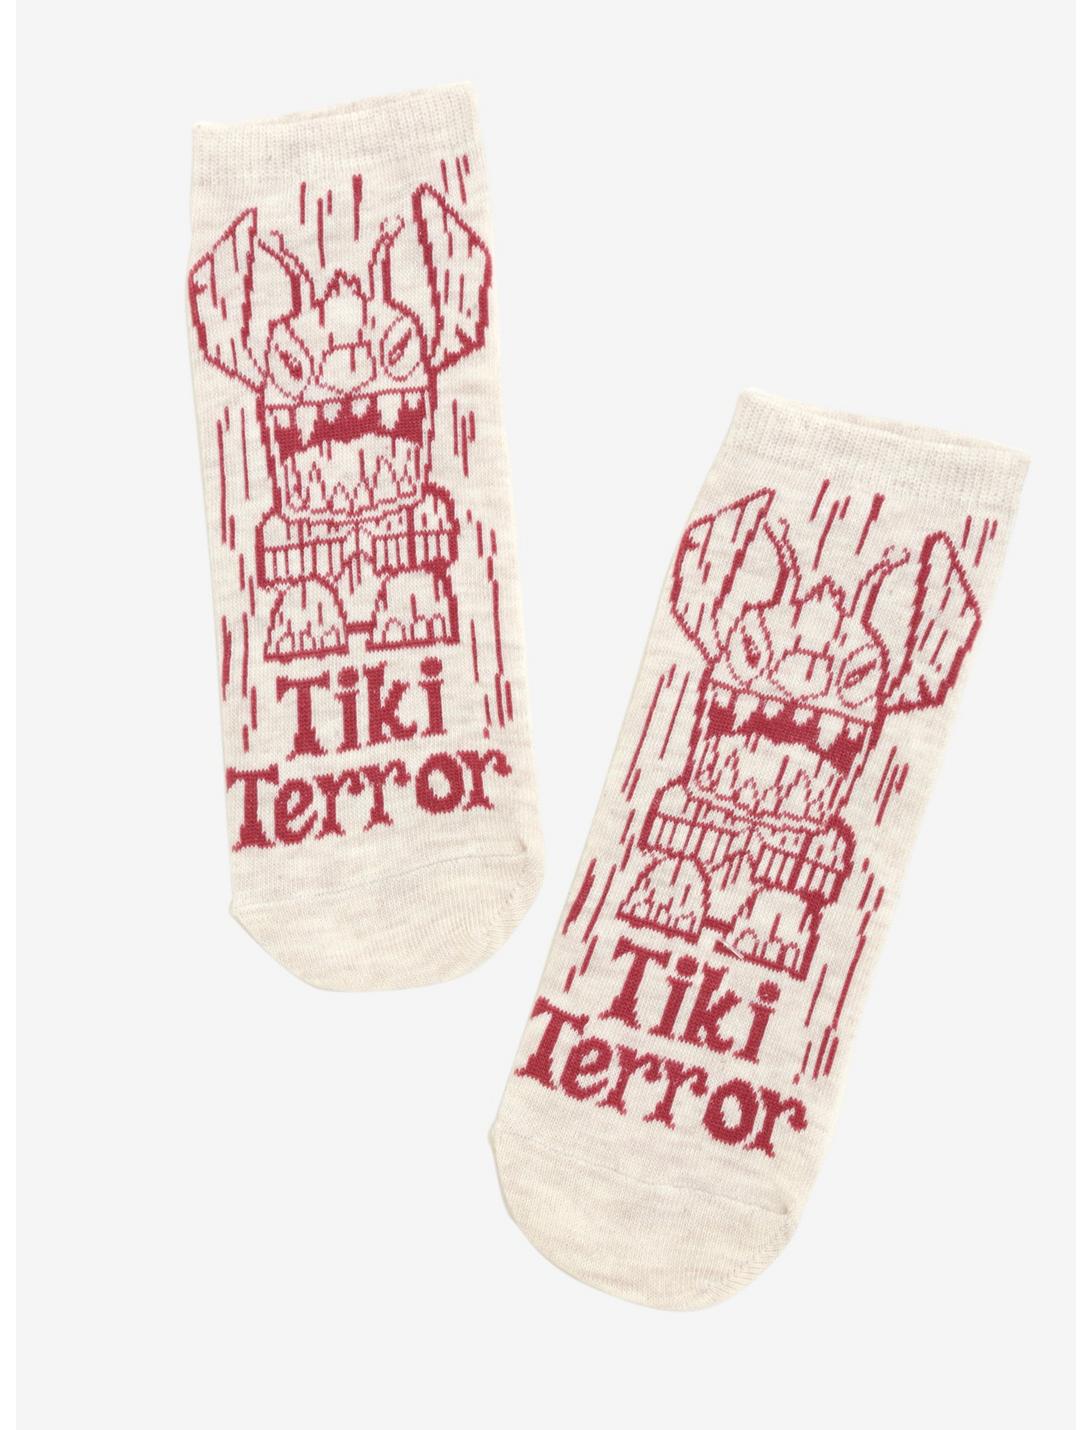 Disney Lilo & Stitch Tiki Terror Ankle Socks, , hi-res